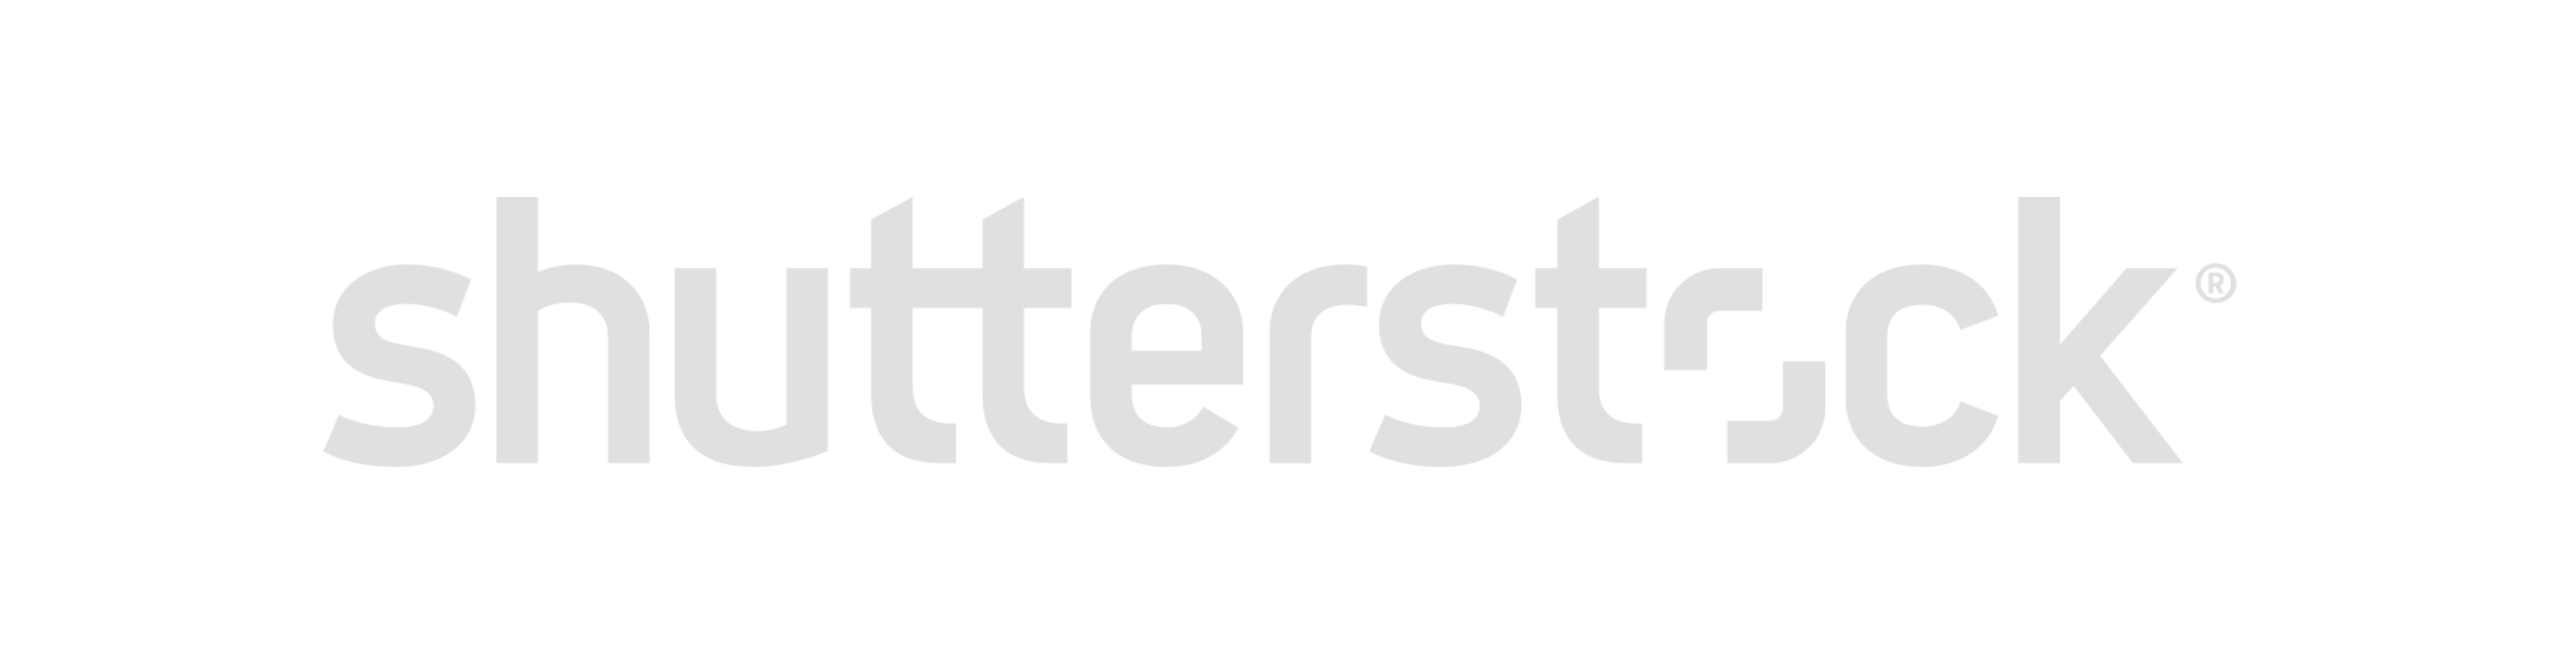 shutterstock_logo.svg